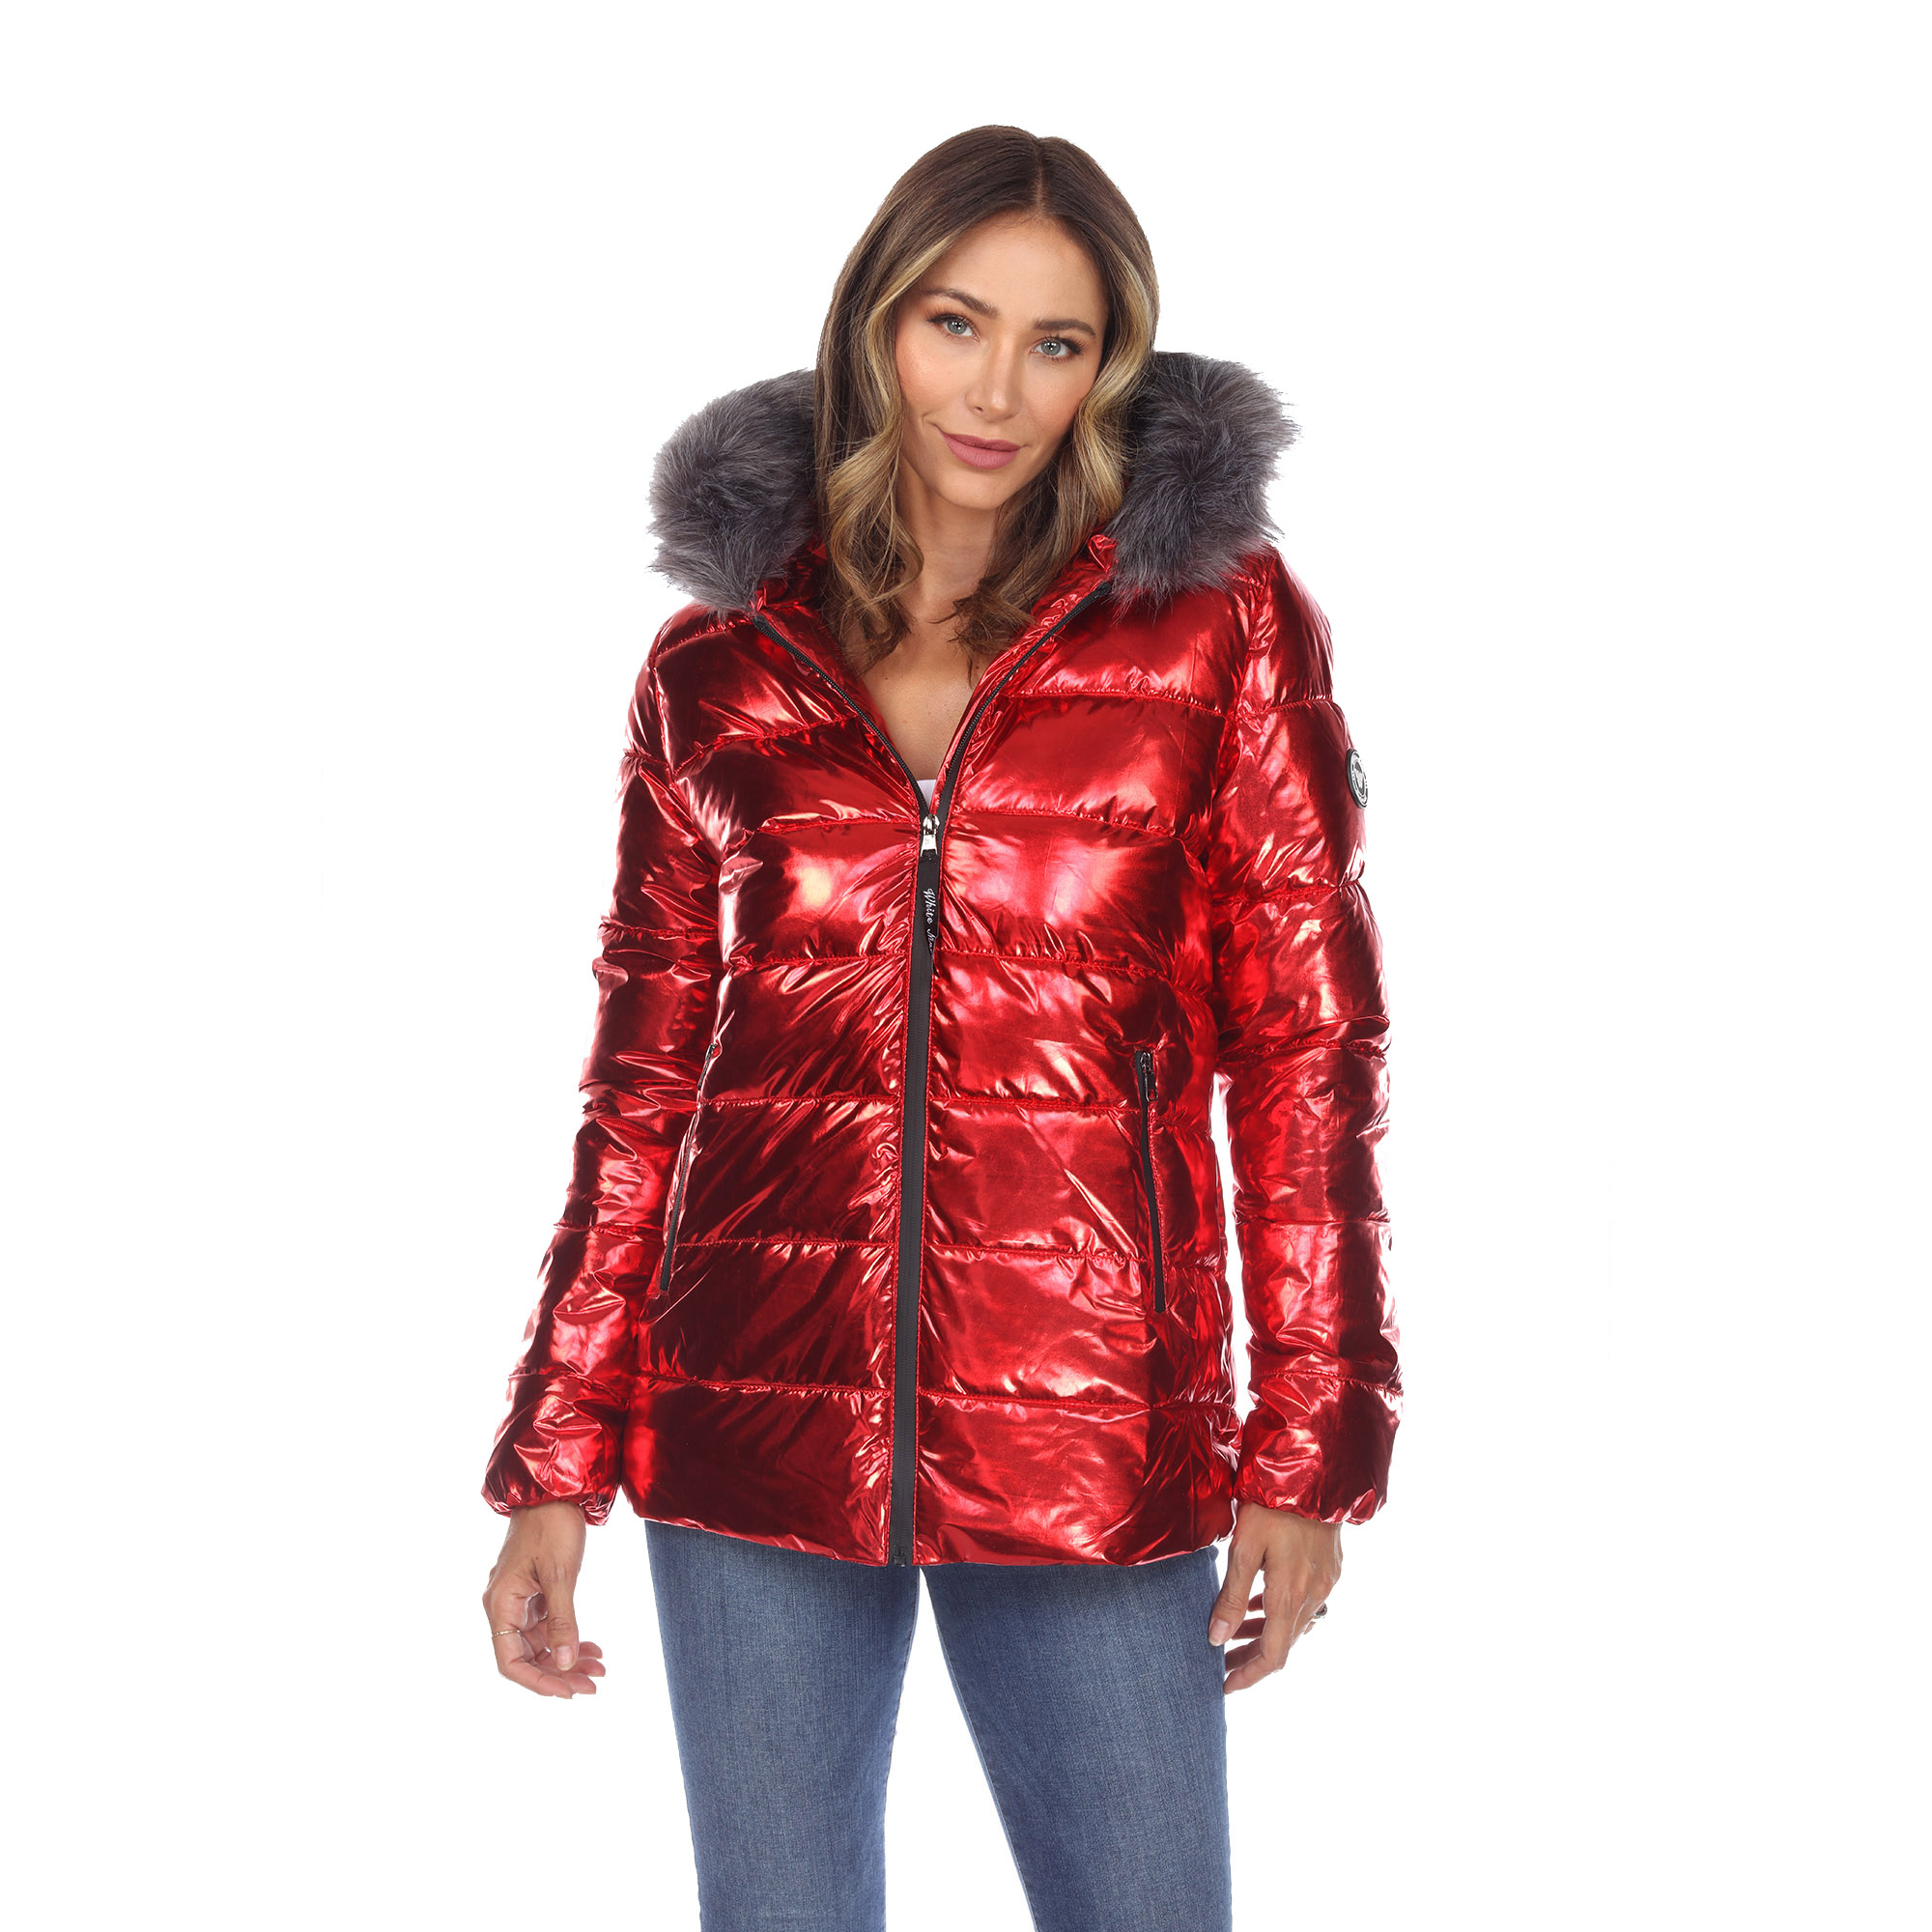 White Mark Womenâs Metallic Puffer Coat With Hoodie - Red, Large